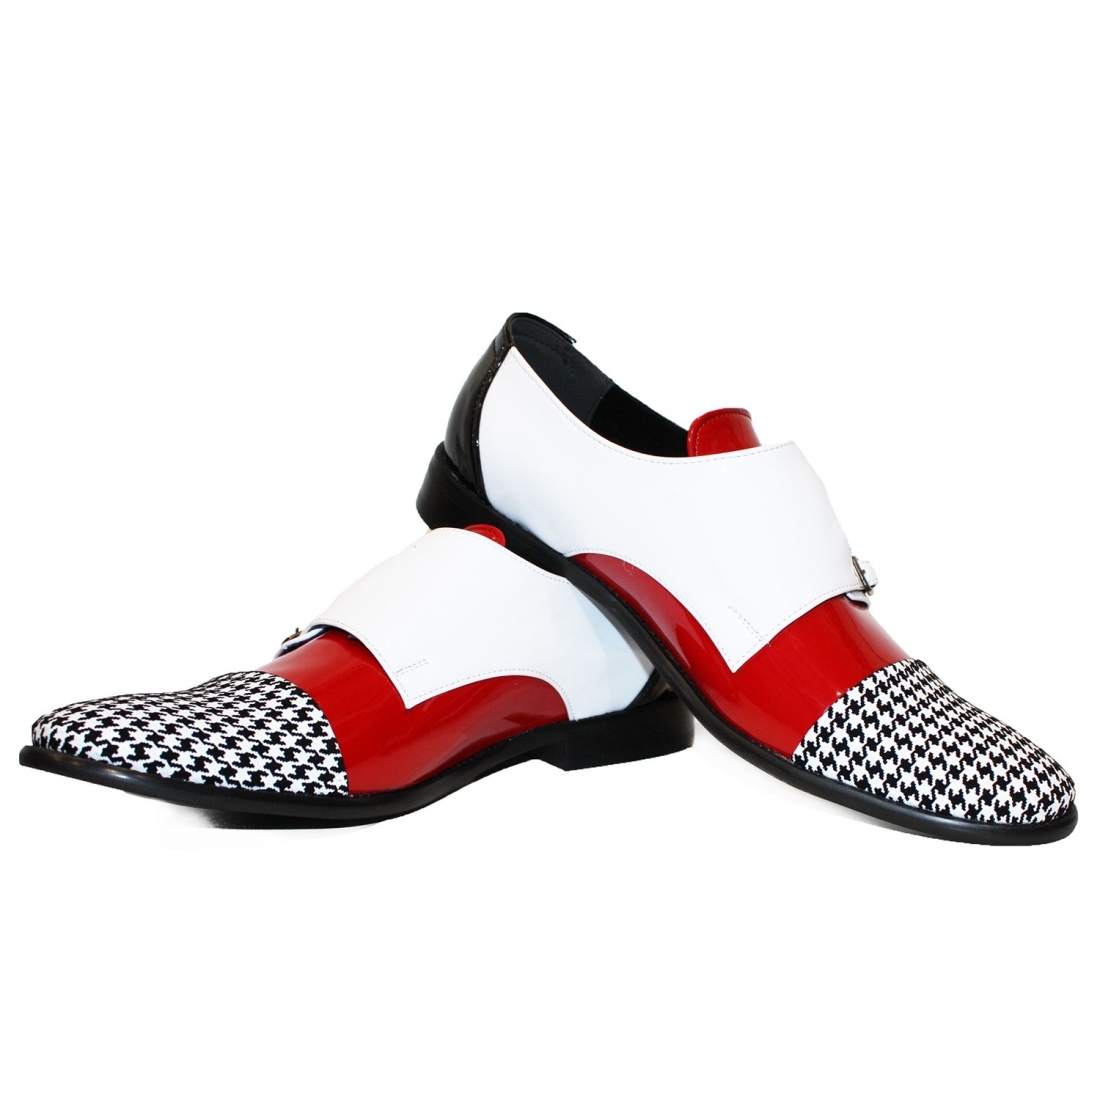 Modello Typaga - Обувь Monk - Handmade Colorful Italian Leather Shoes